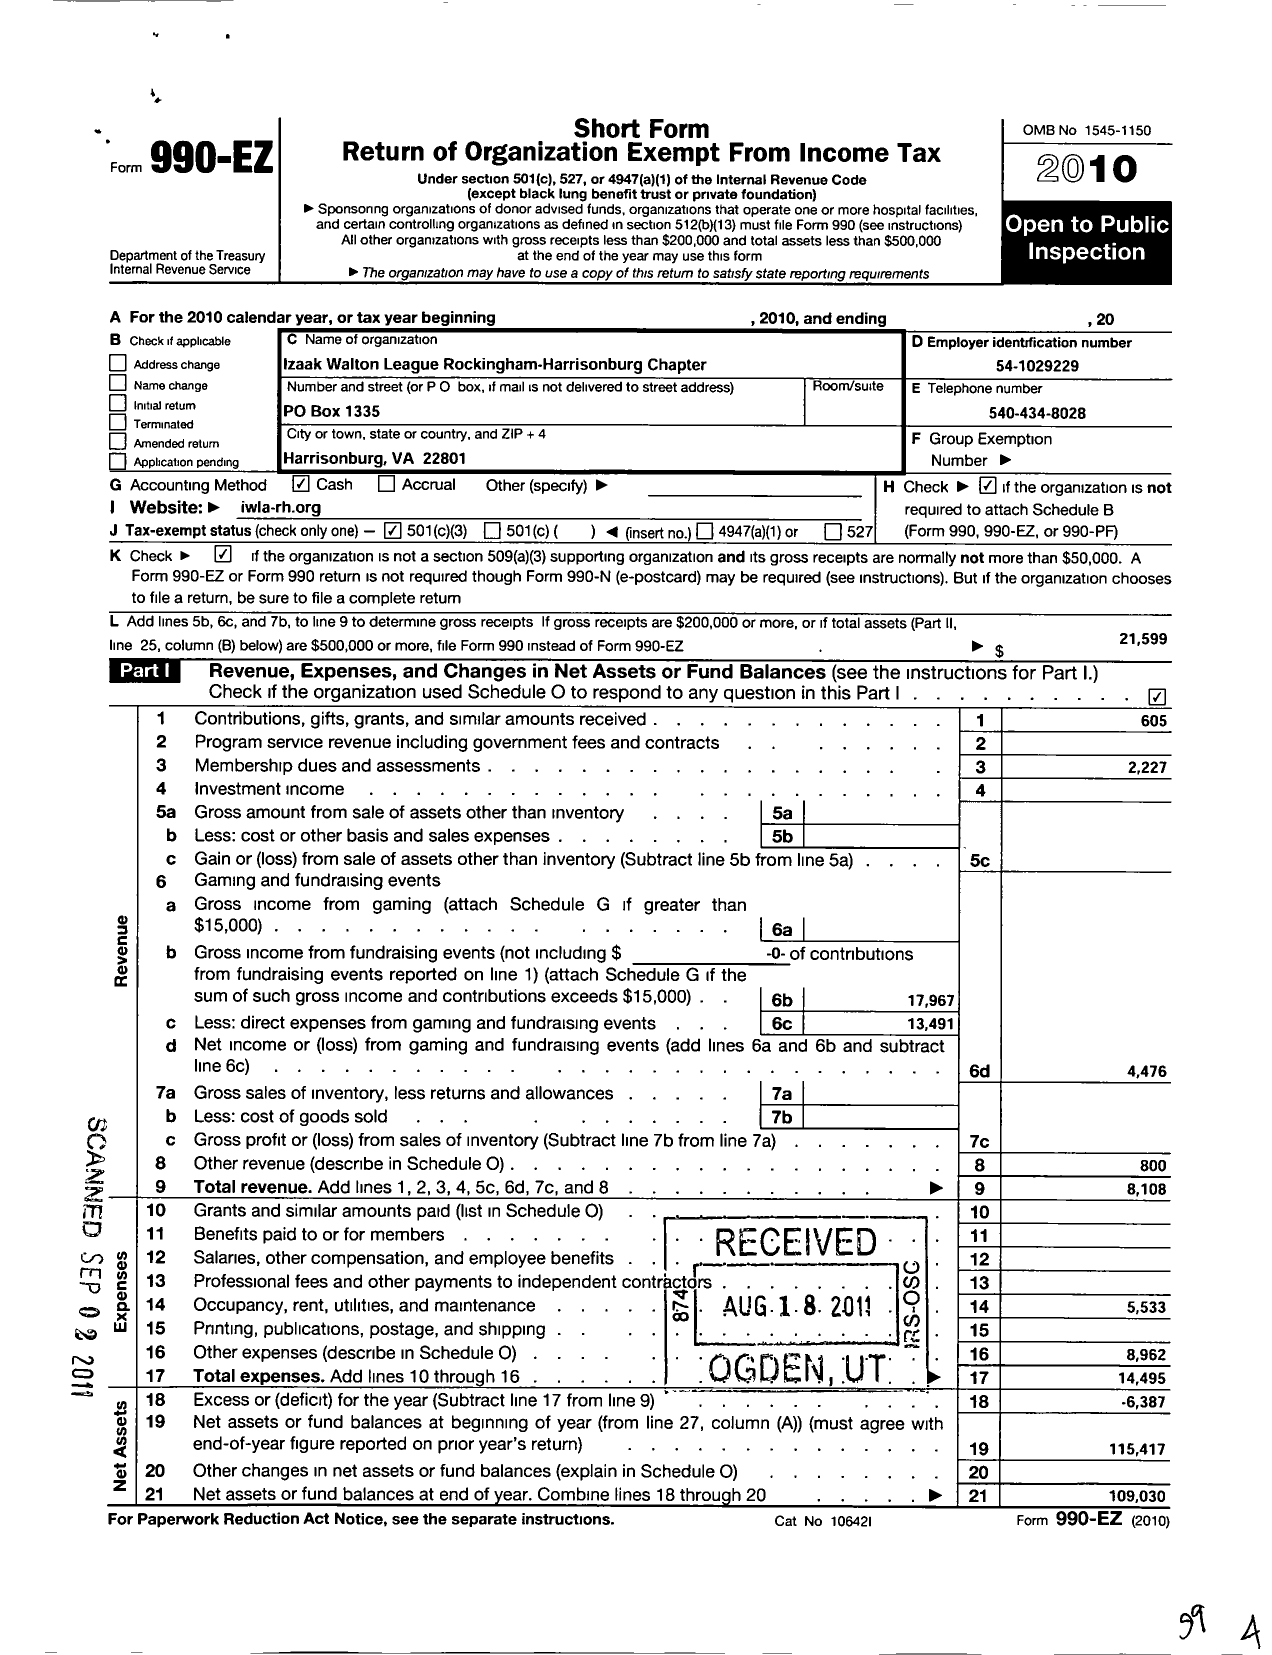 Image of first page of 2010 Form 990EZ for Izaak Walton League Rockingham-Harrisonburg Chapter